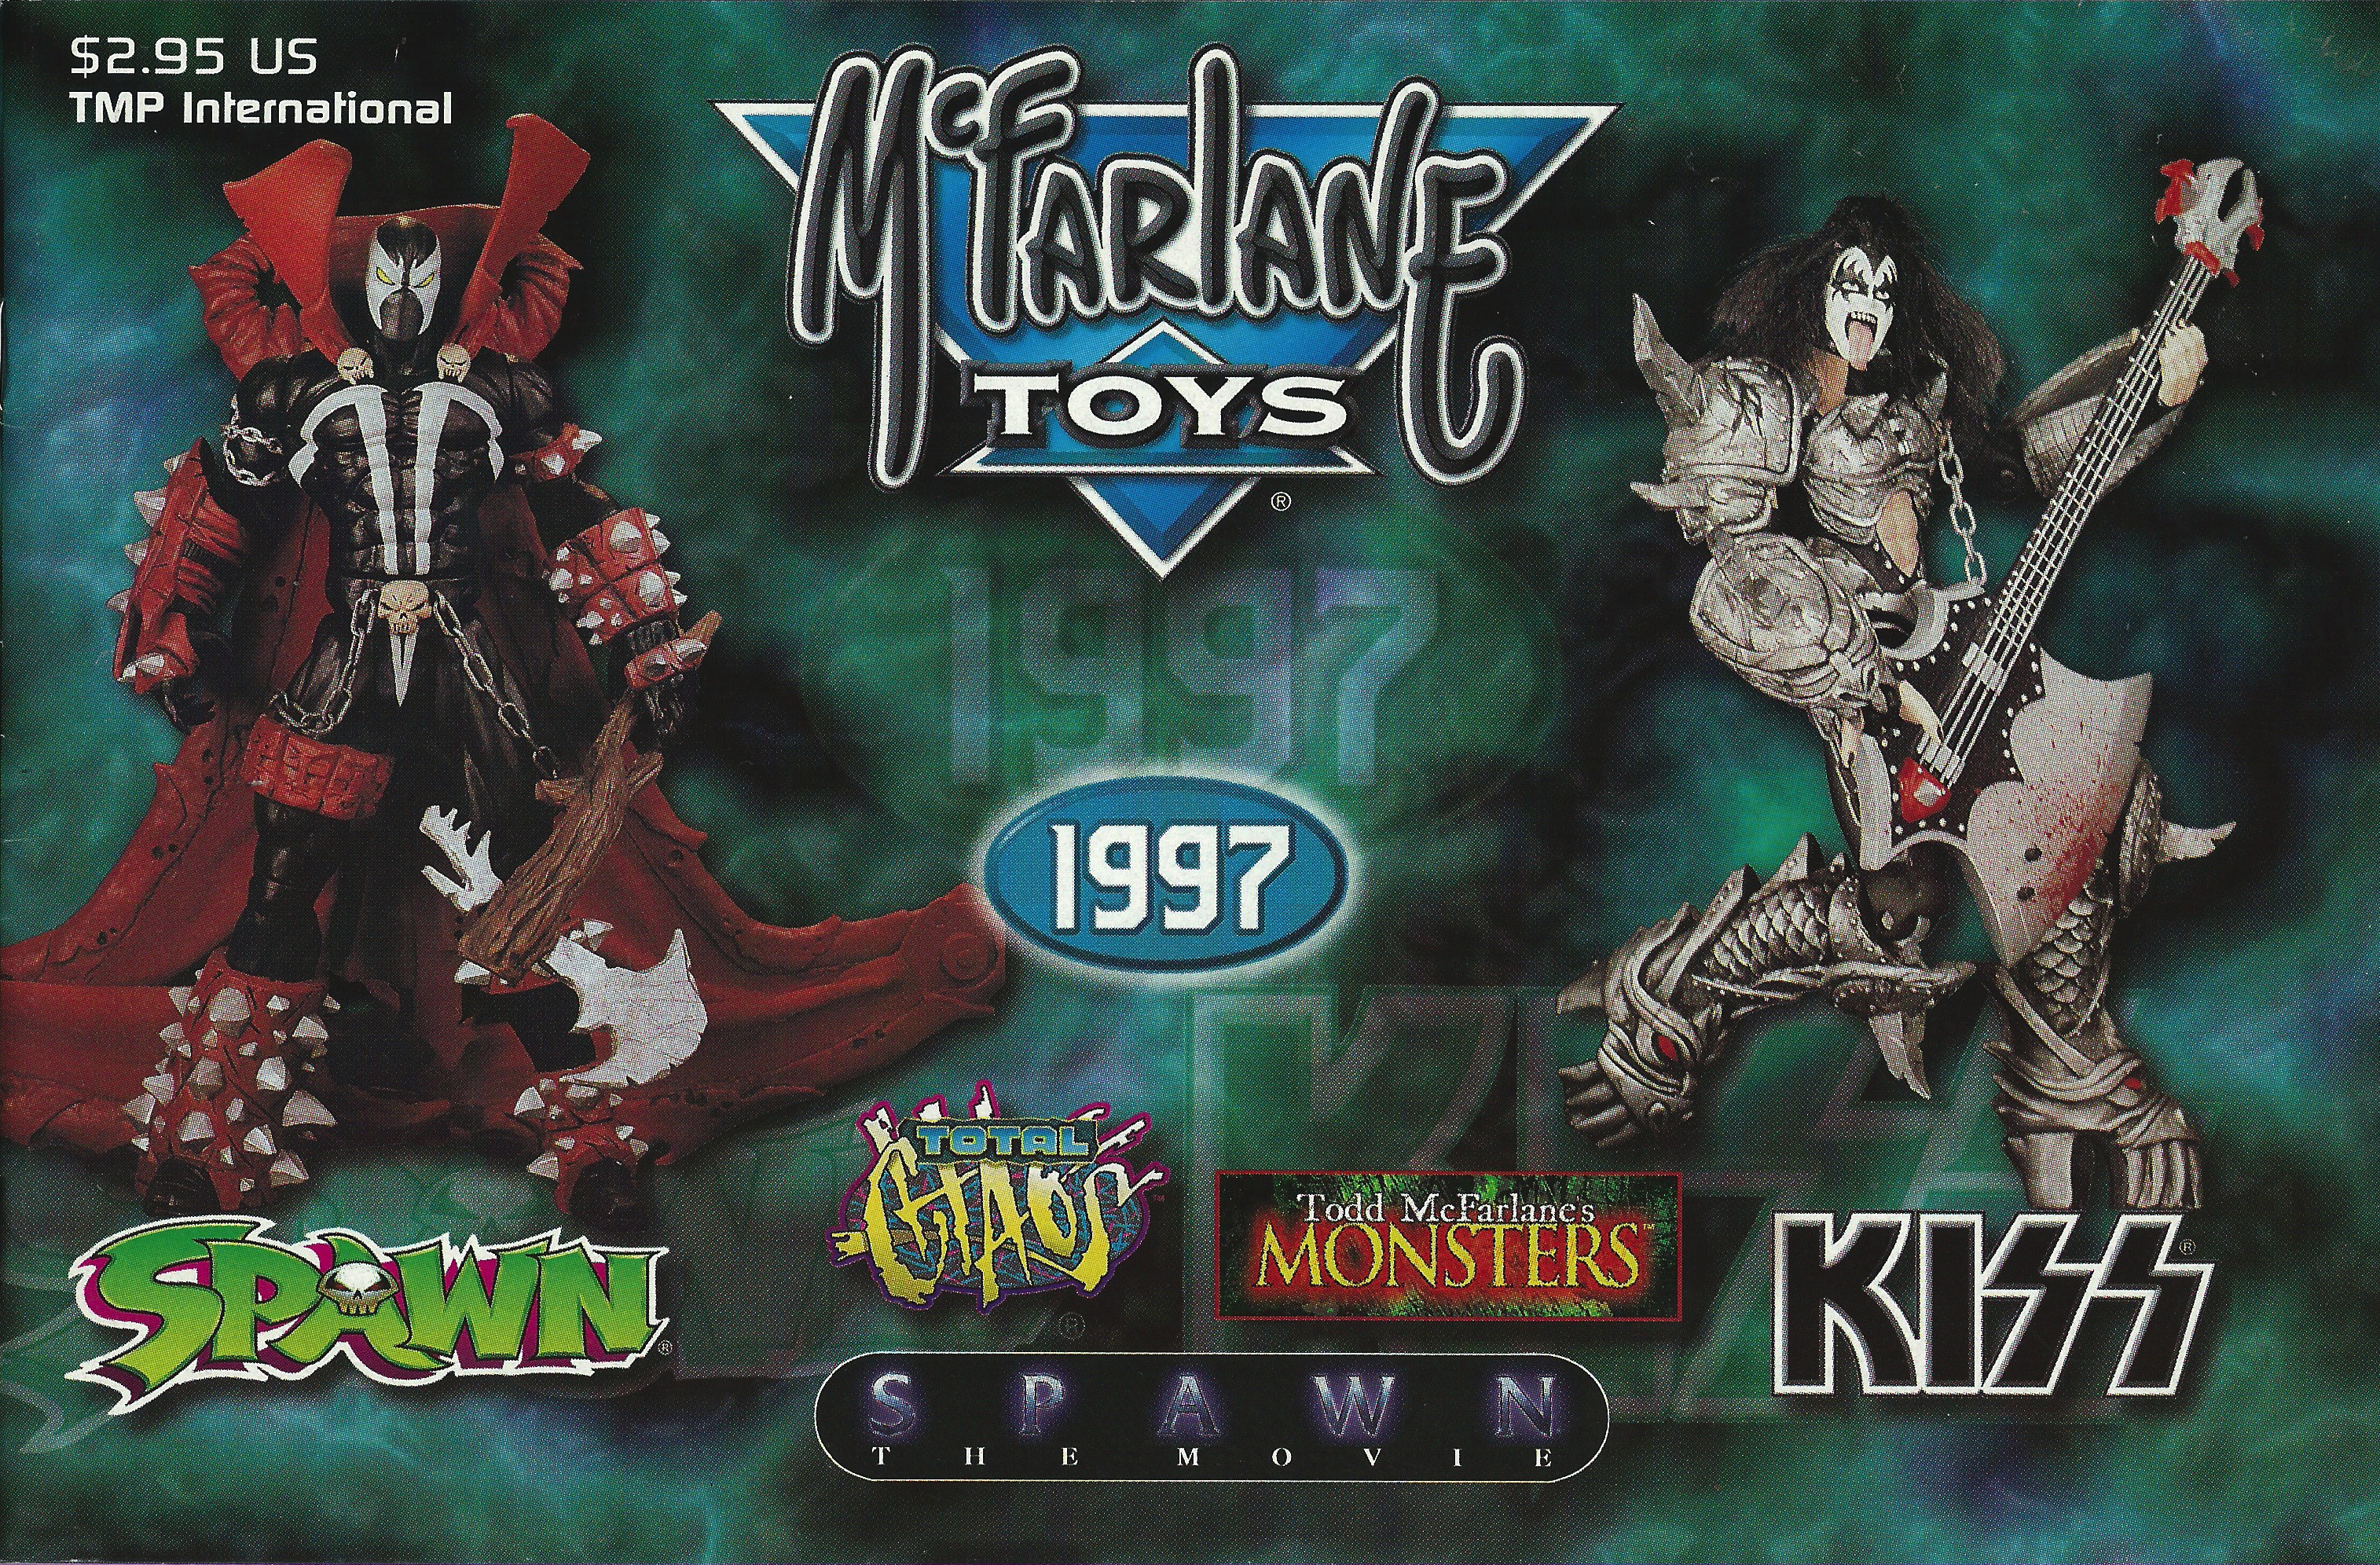 Total Chaos” in the 1997 McFarlane Toys Catalog – BattleGrip